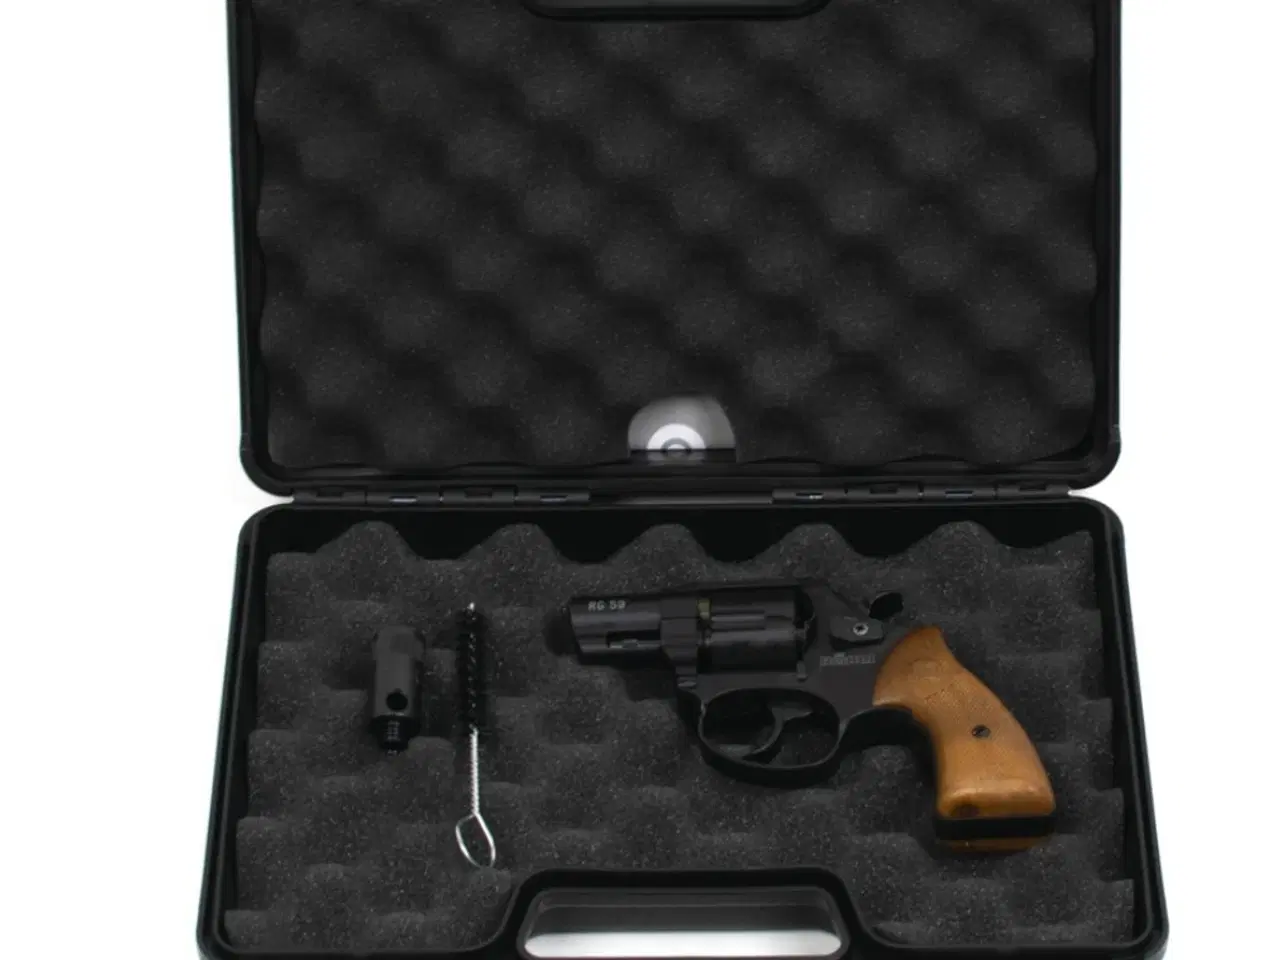 Billede 2 - Røhm RG59 signal pistol